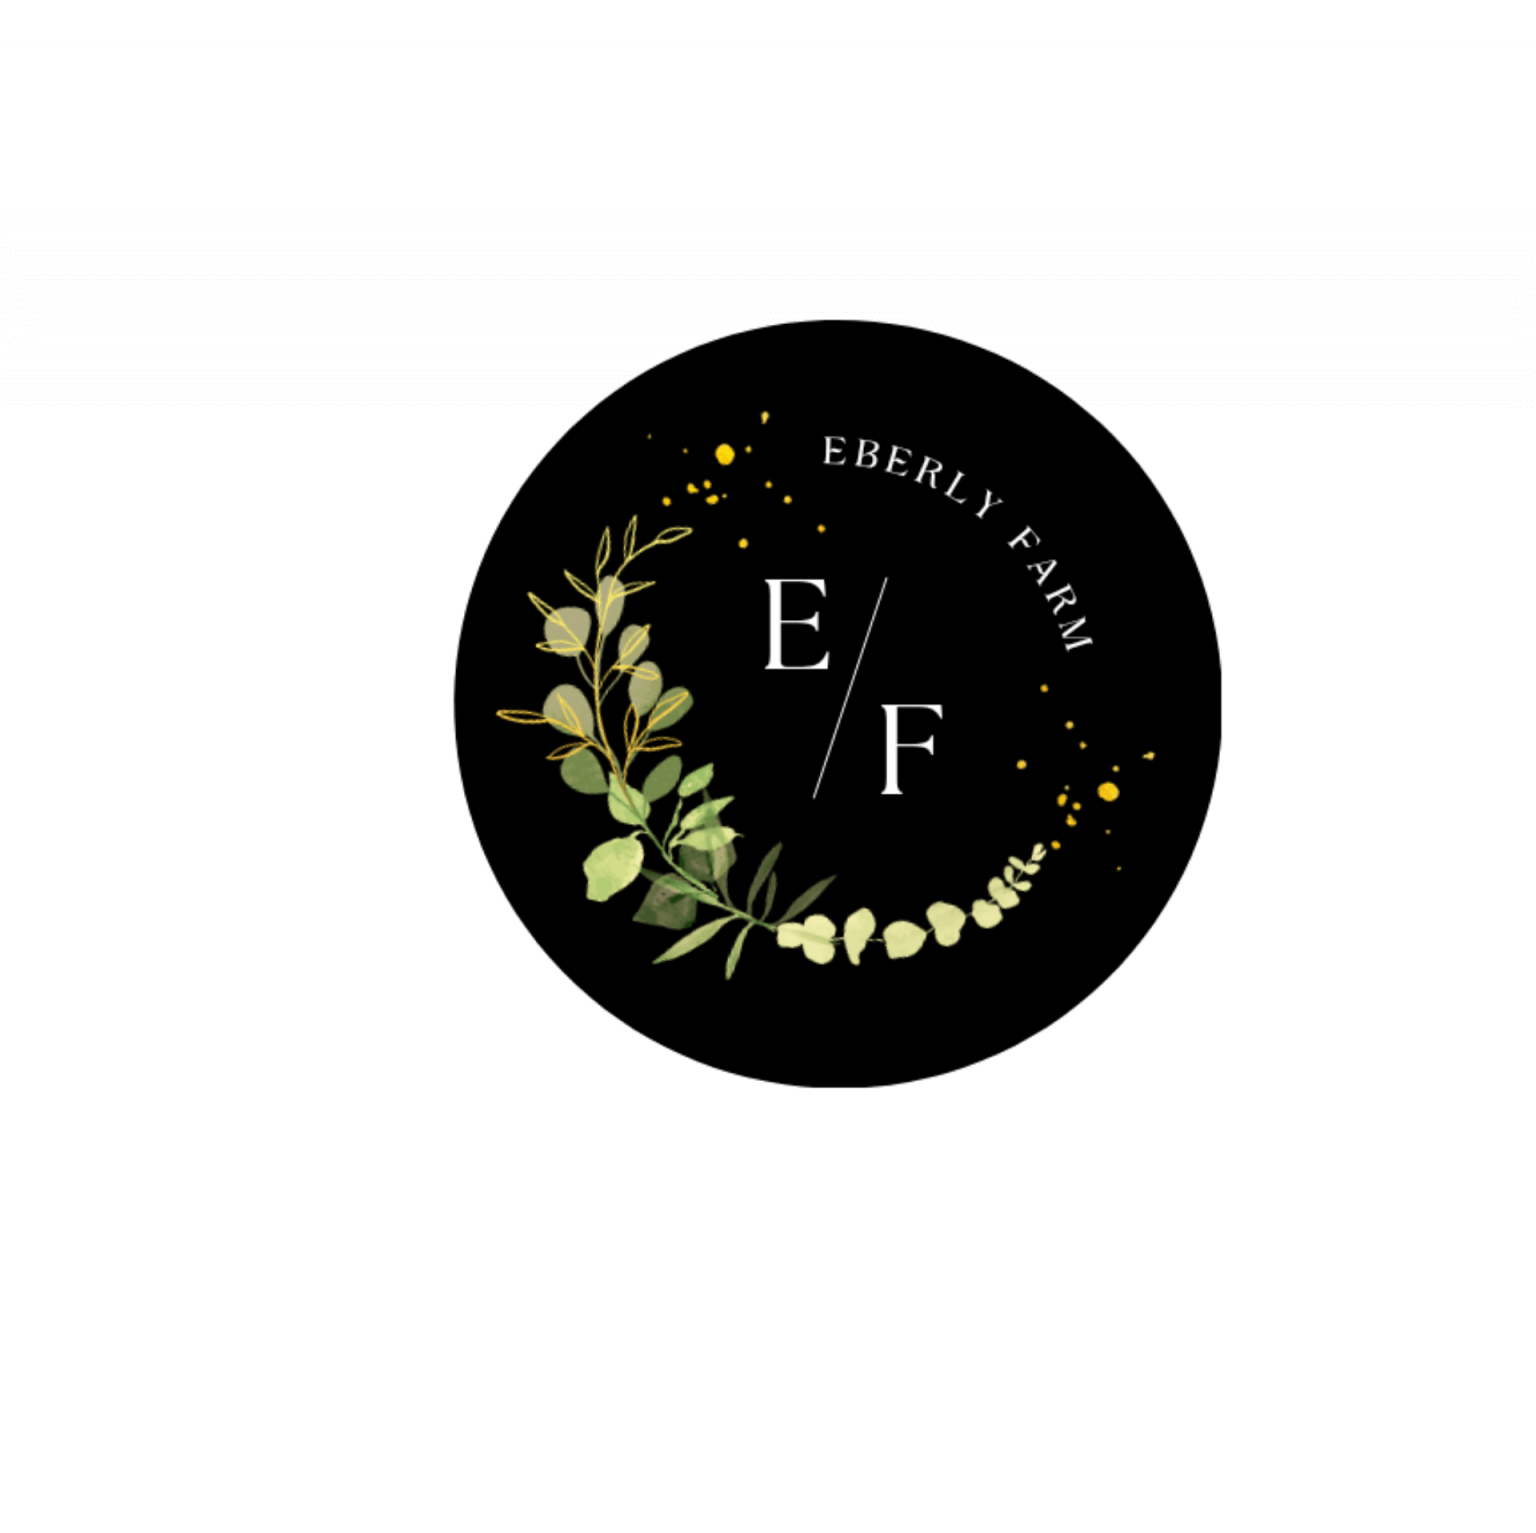 Eberly Farm - Black logo